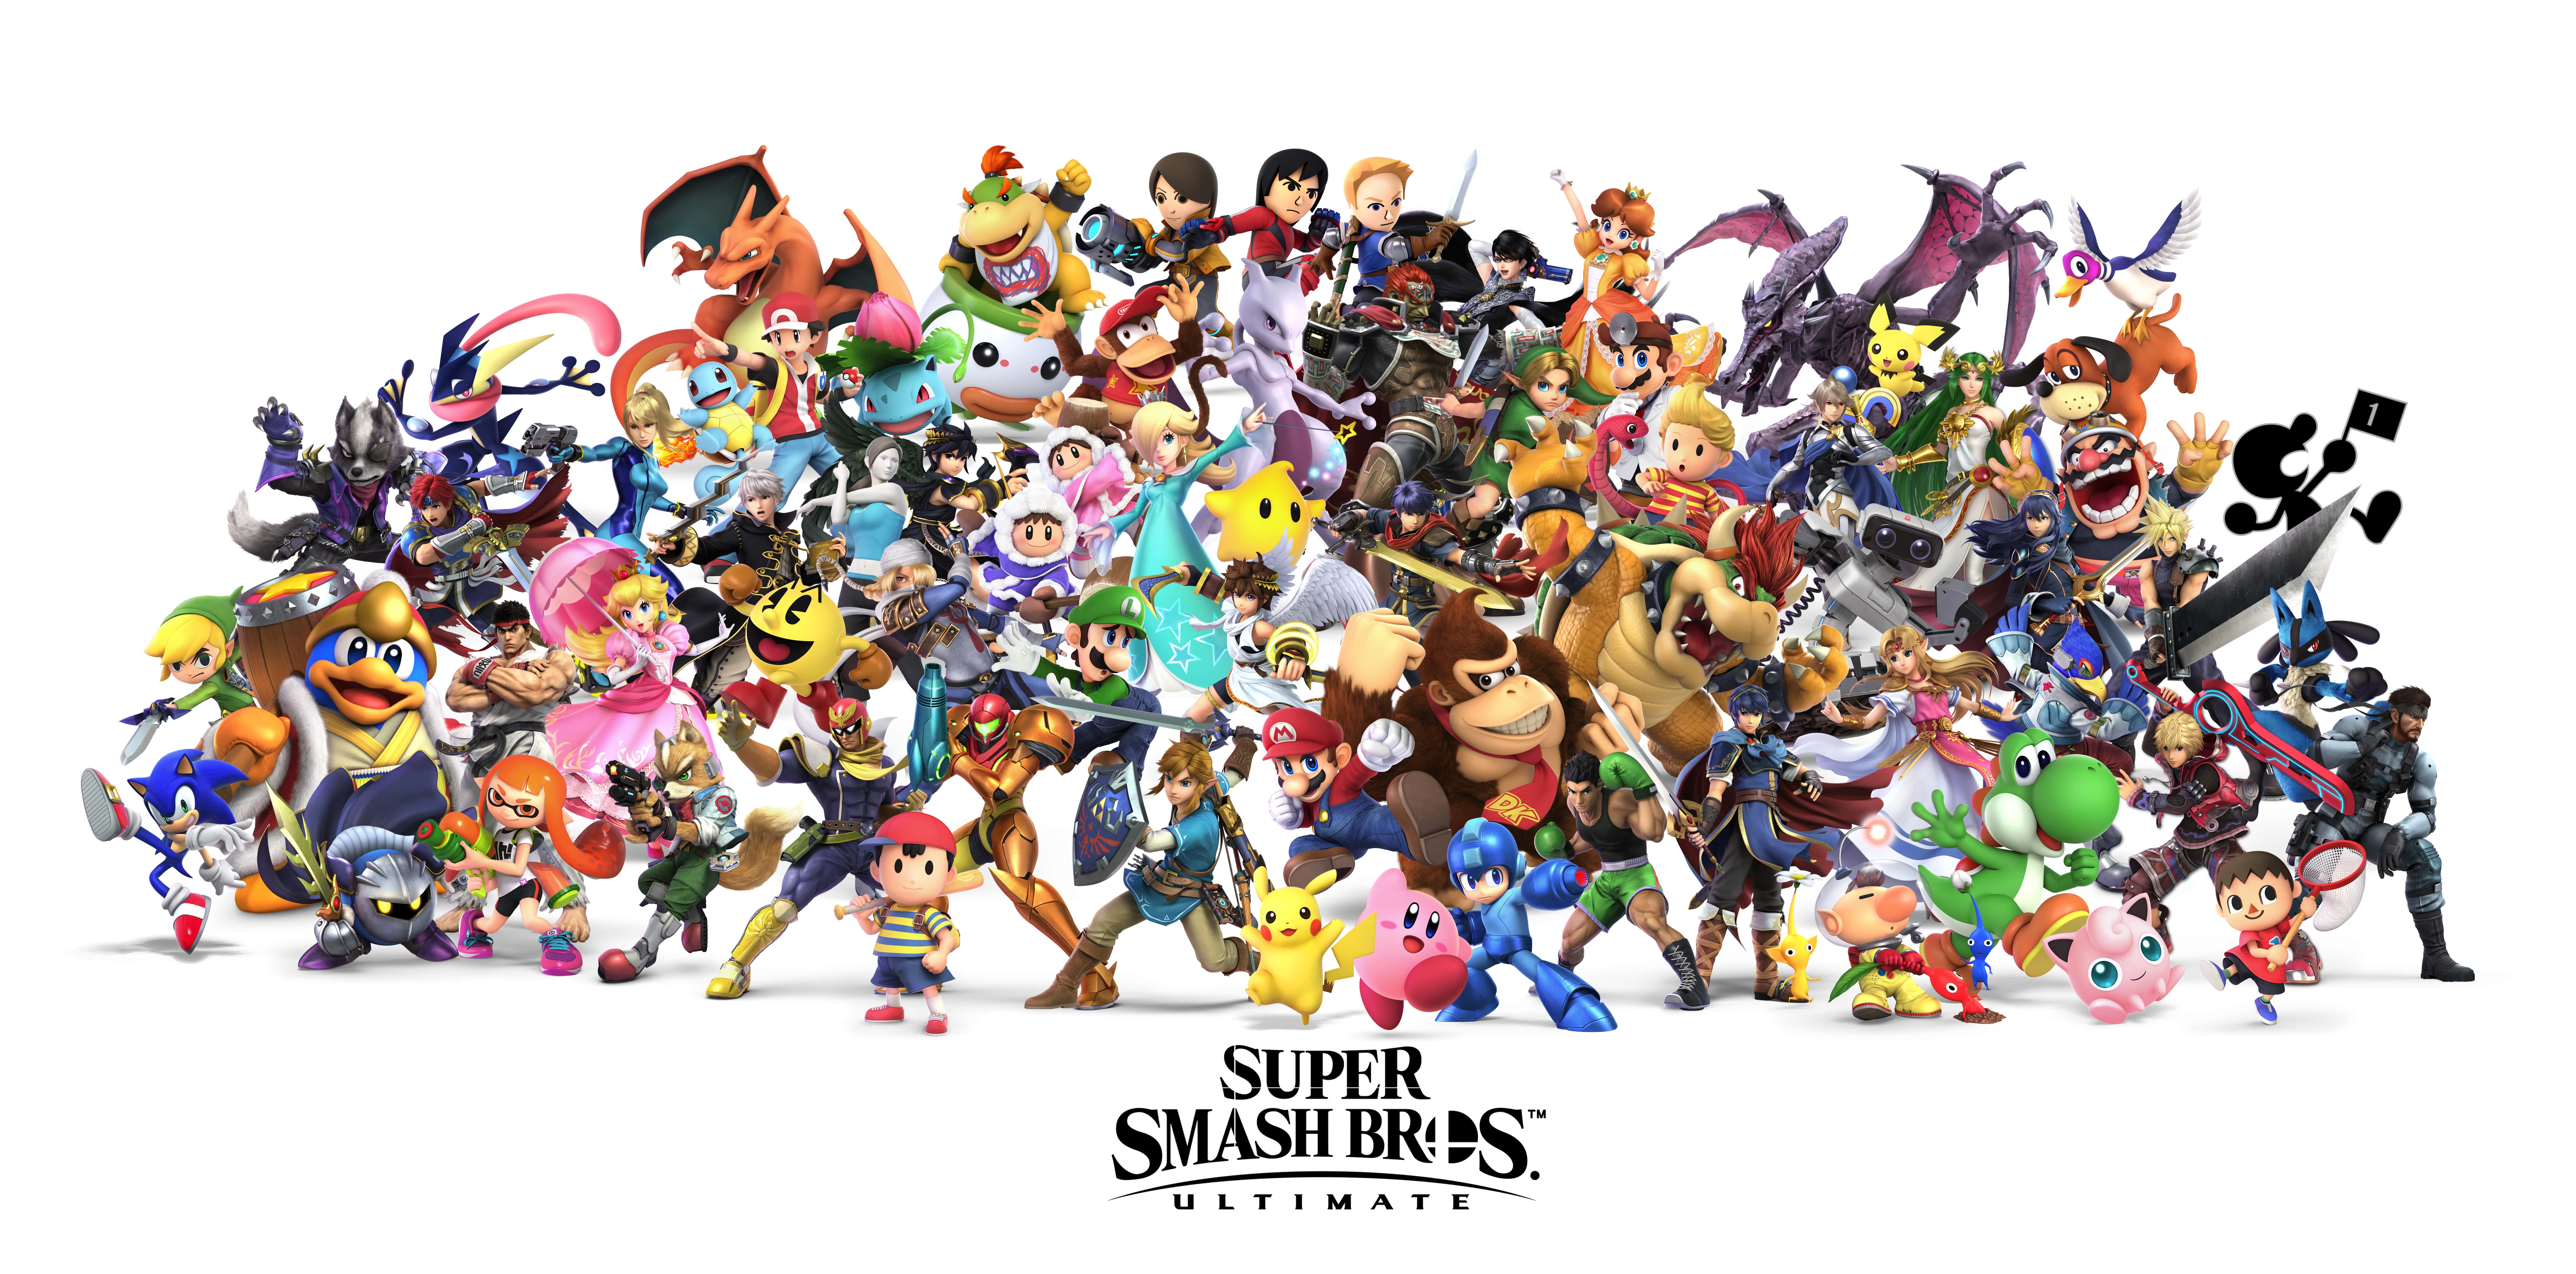 Super Smash Bros 4K Wallpapers - Top Free Super Smash Bros 4K